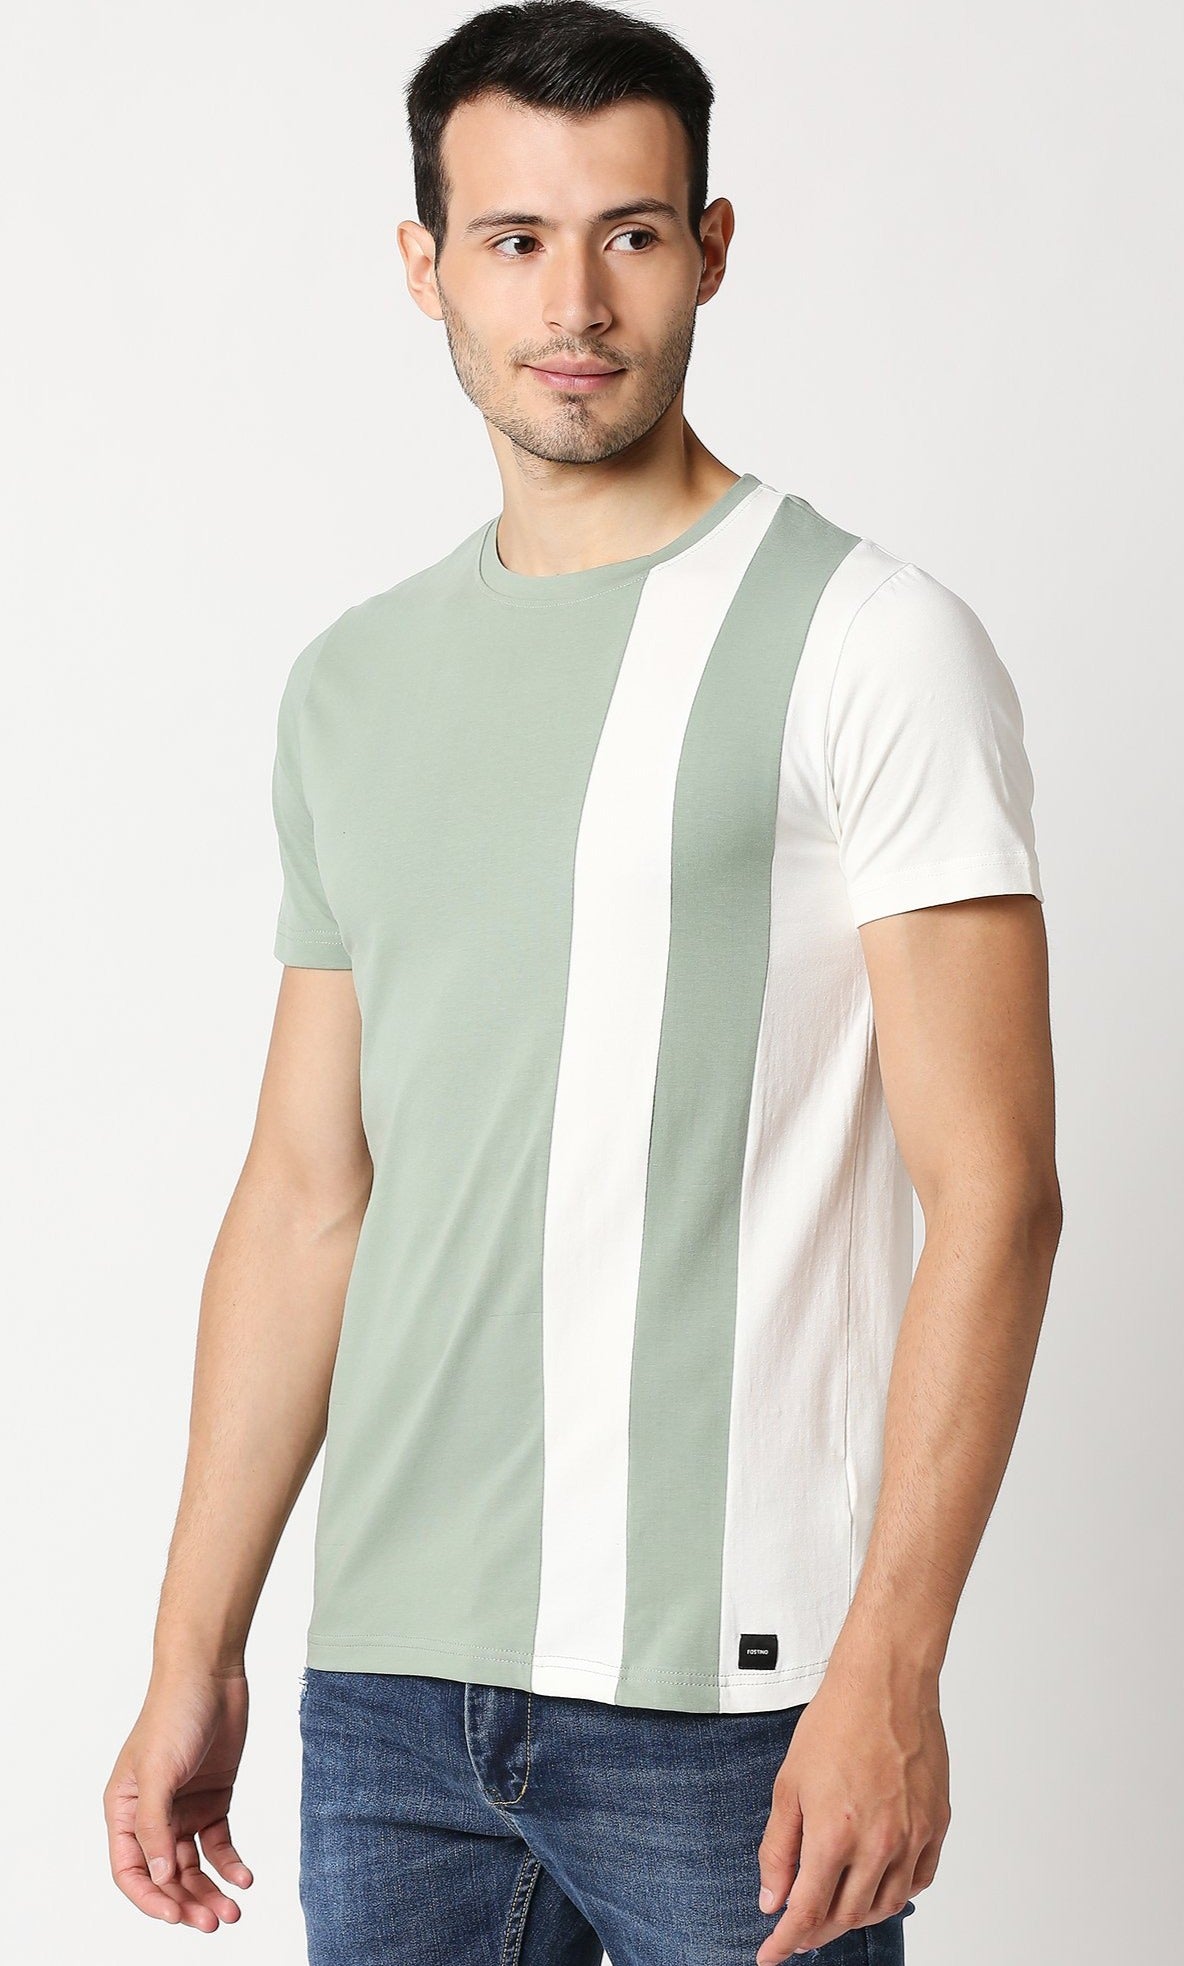 Fostino Salford Green Round Neck T-Shirt - Fostino - T-Shirts